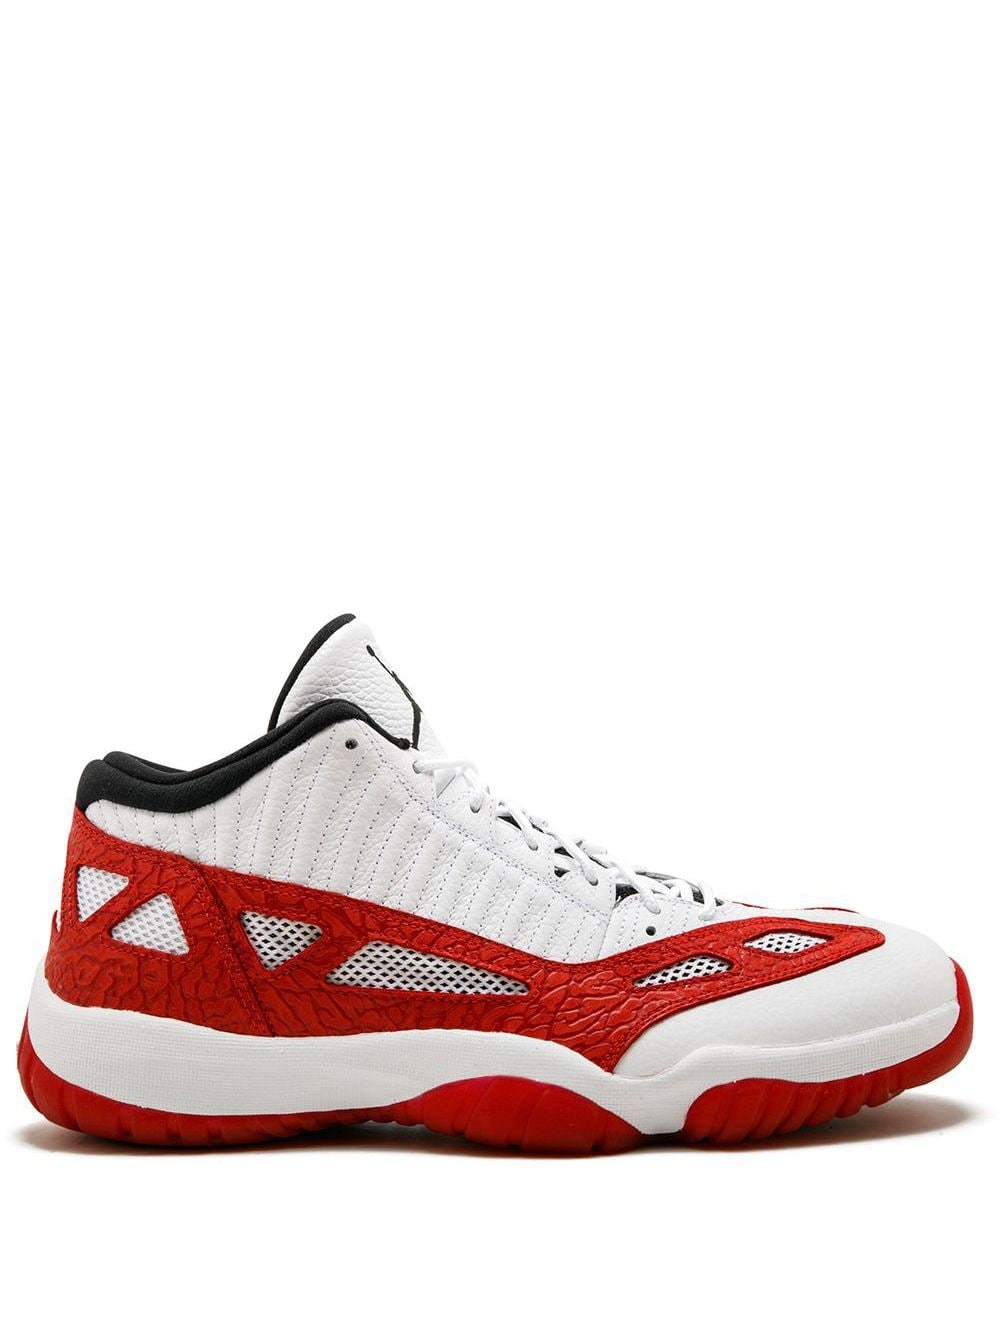 Jordan Air Jordan 11 Retro sneakers